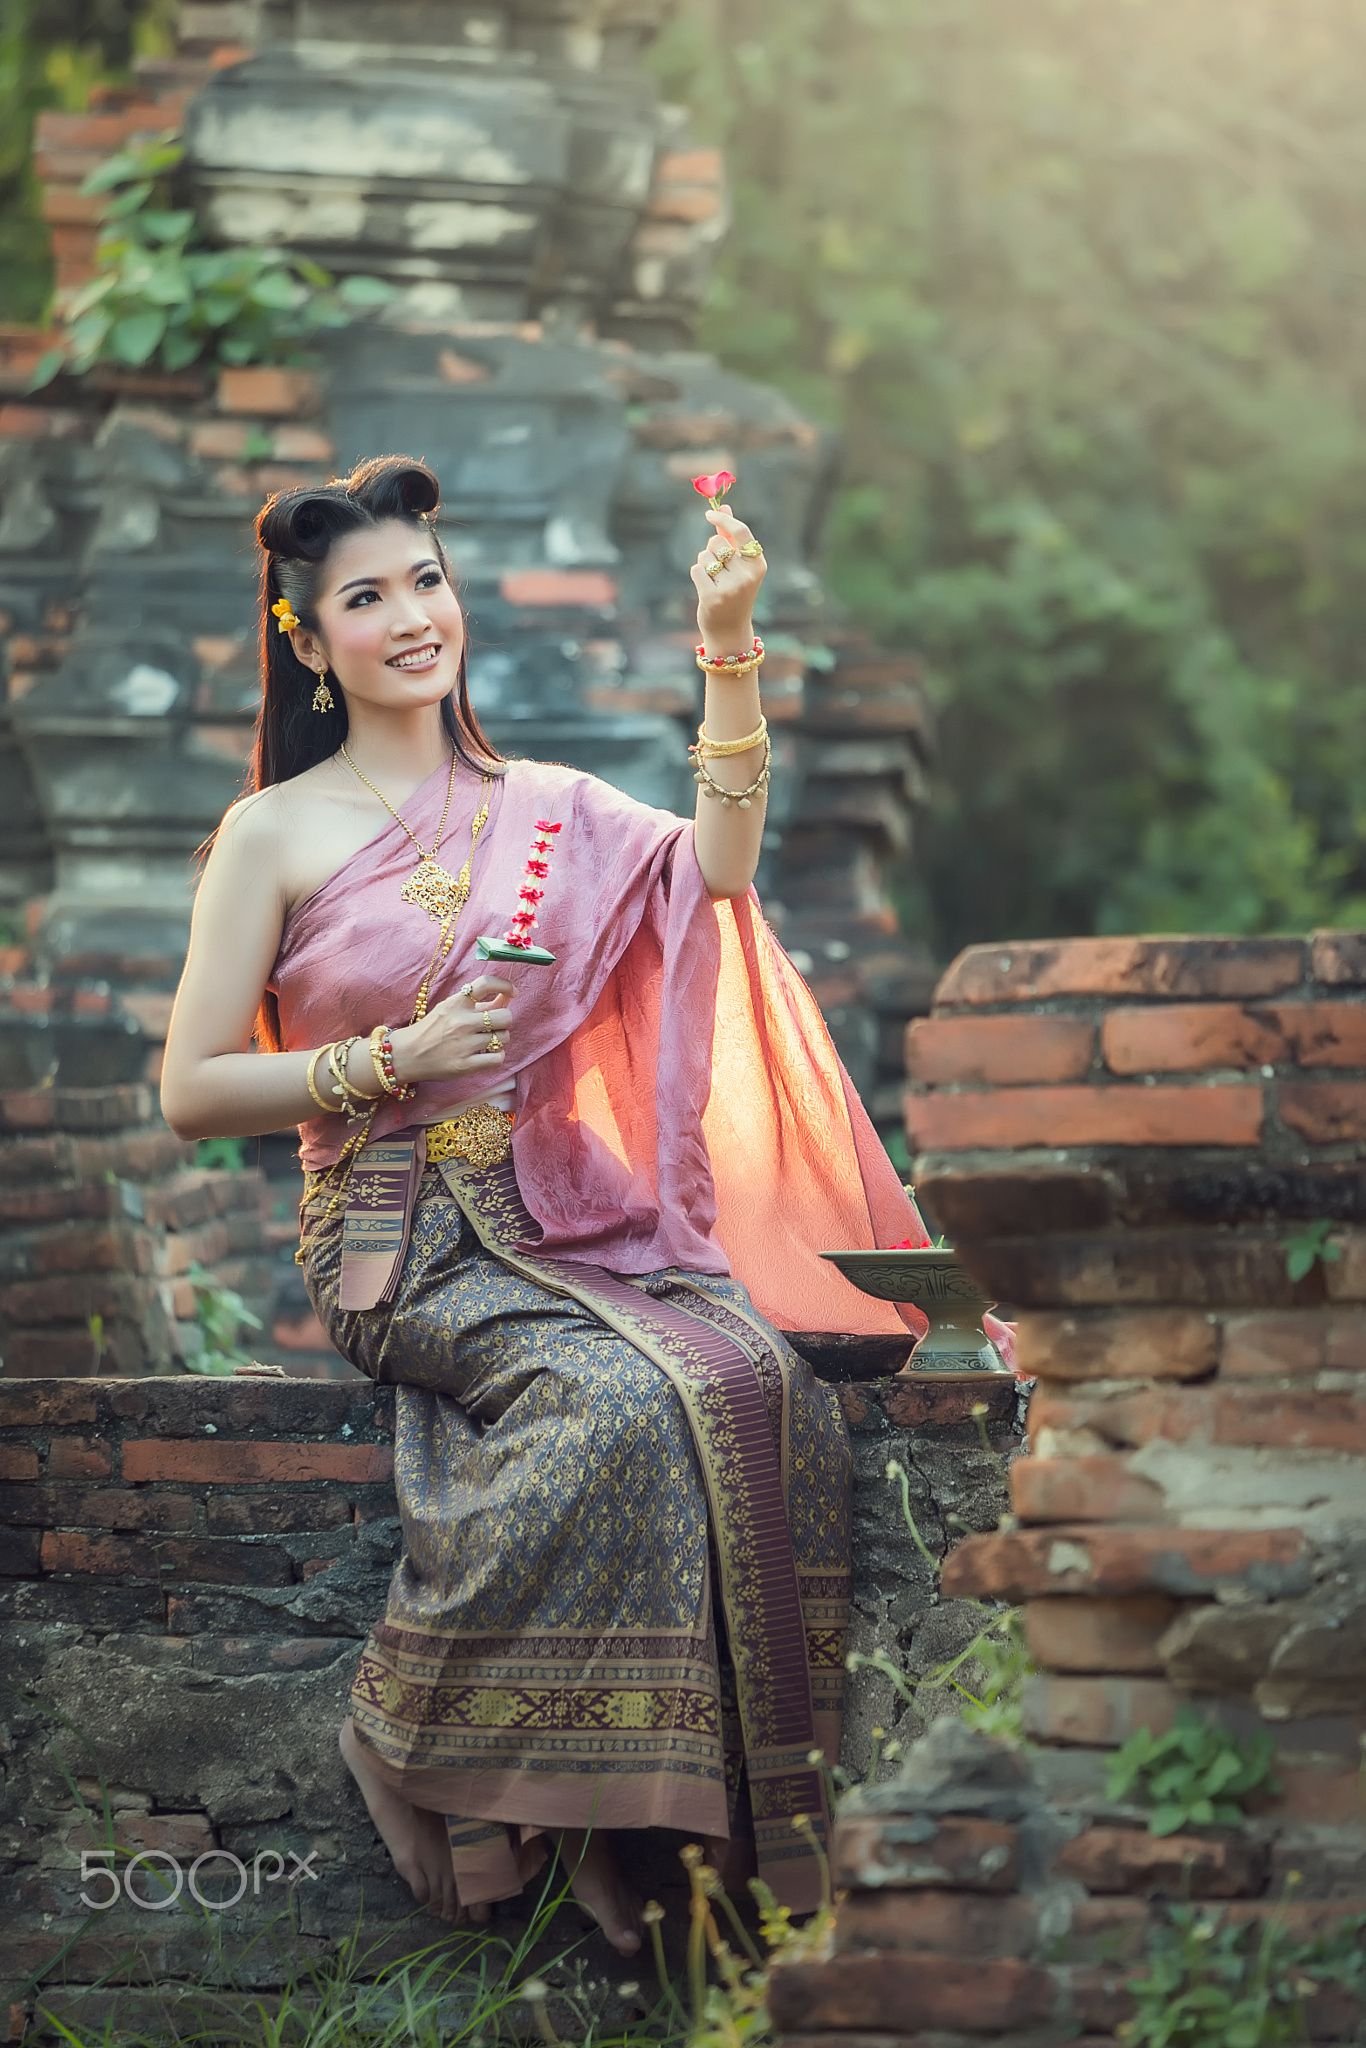 Тайцы одежда. Традиционная тайская одежда. Тайский стиль одежды. Тайский национальный костюм. Национальная одежда Тайланда.